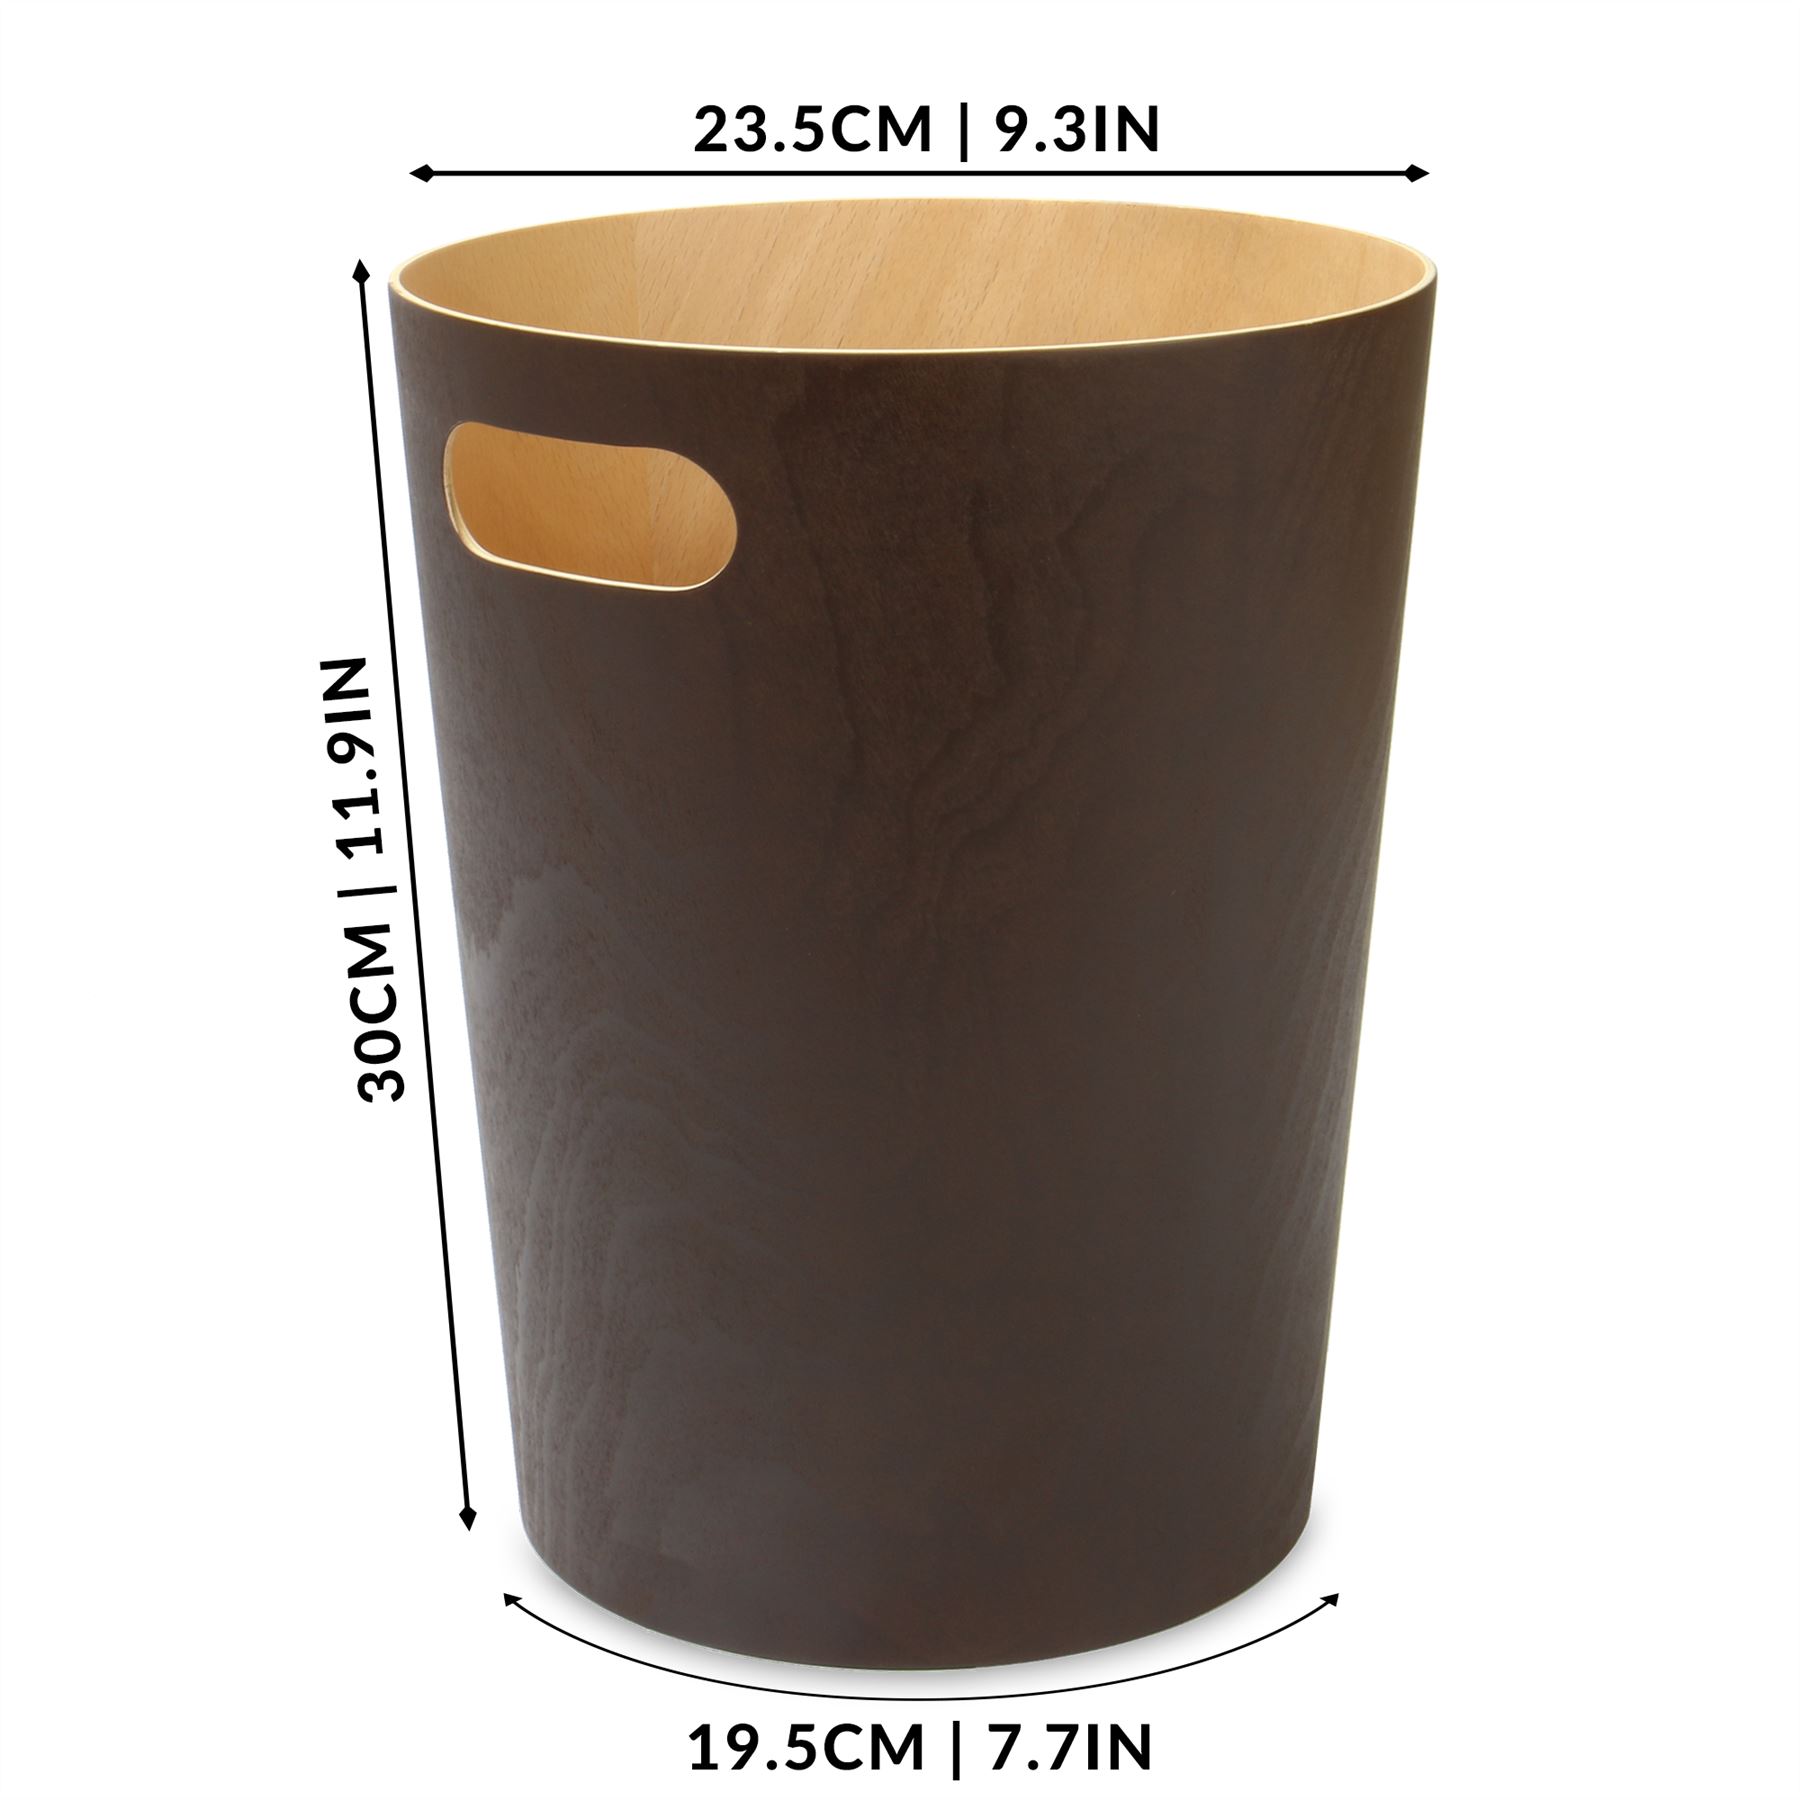 Wooden Waste Paper Bin Brown | M&W